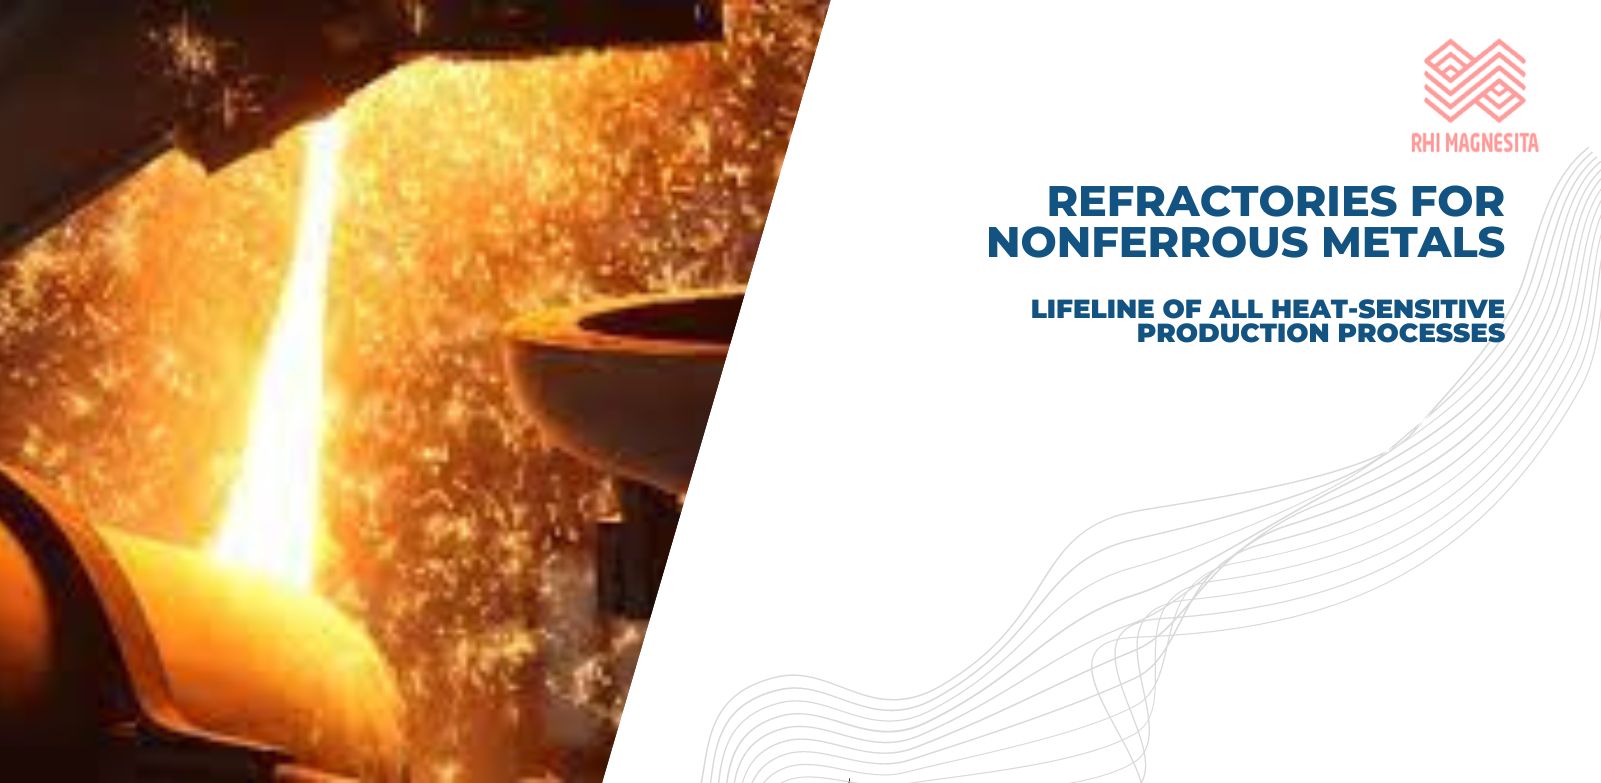 Refractories for Nonferrous Metals: Lifeline of All Heat-Sensitive Production Processes